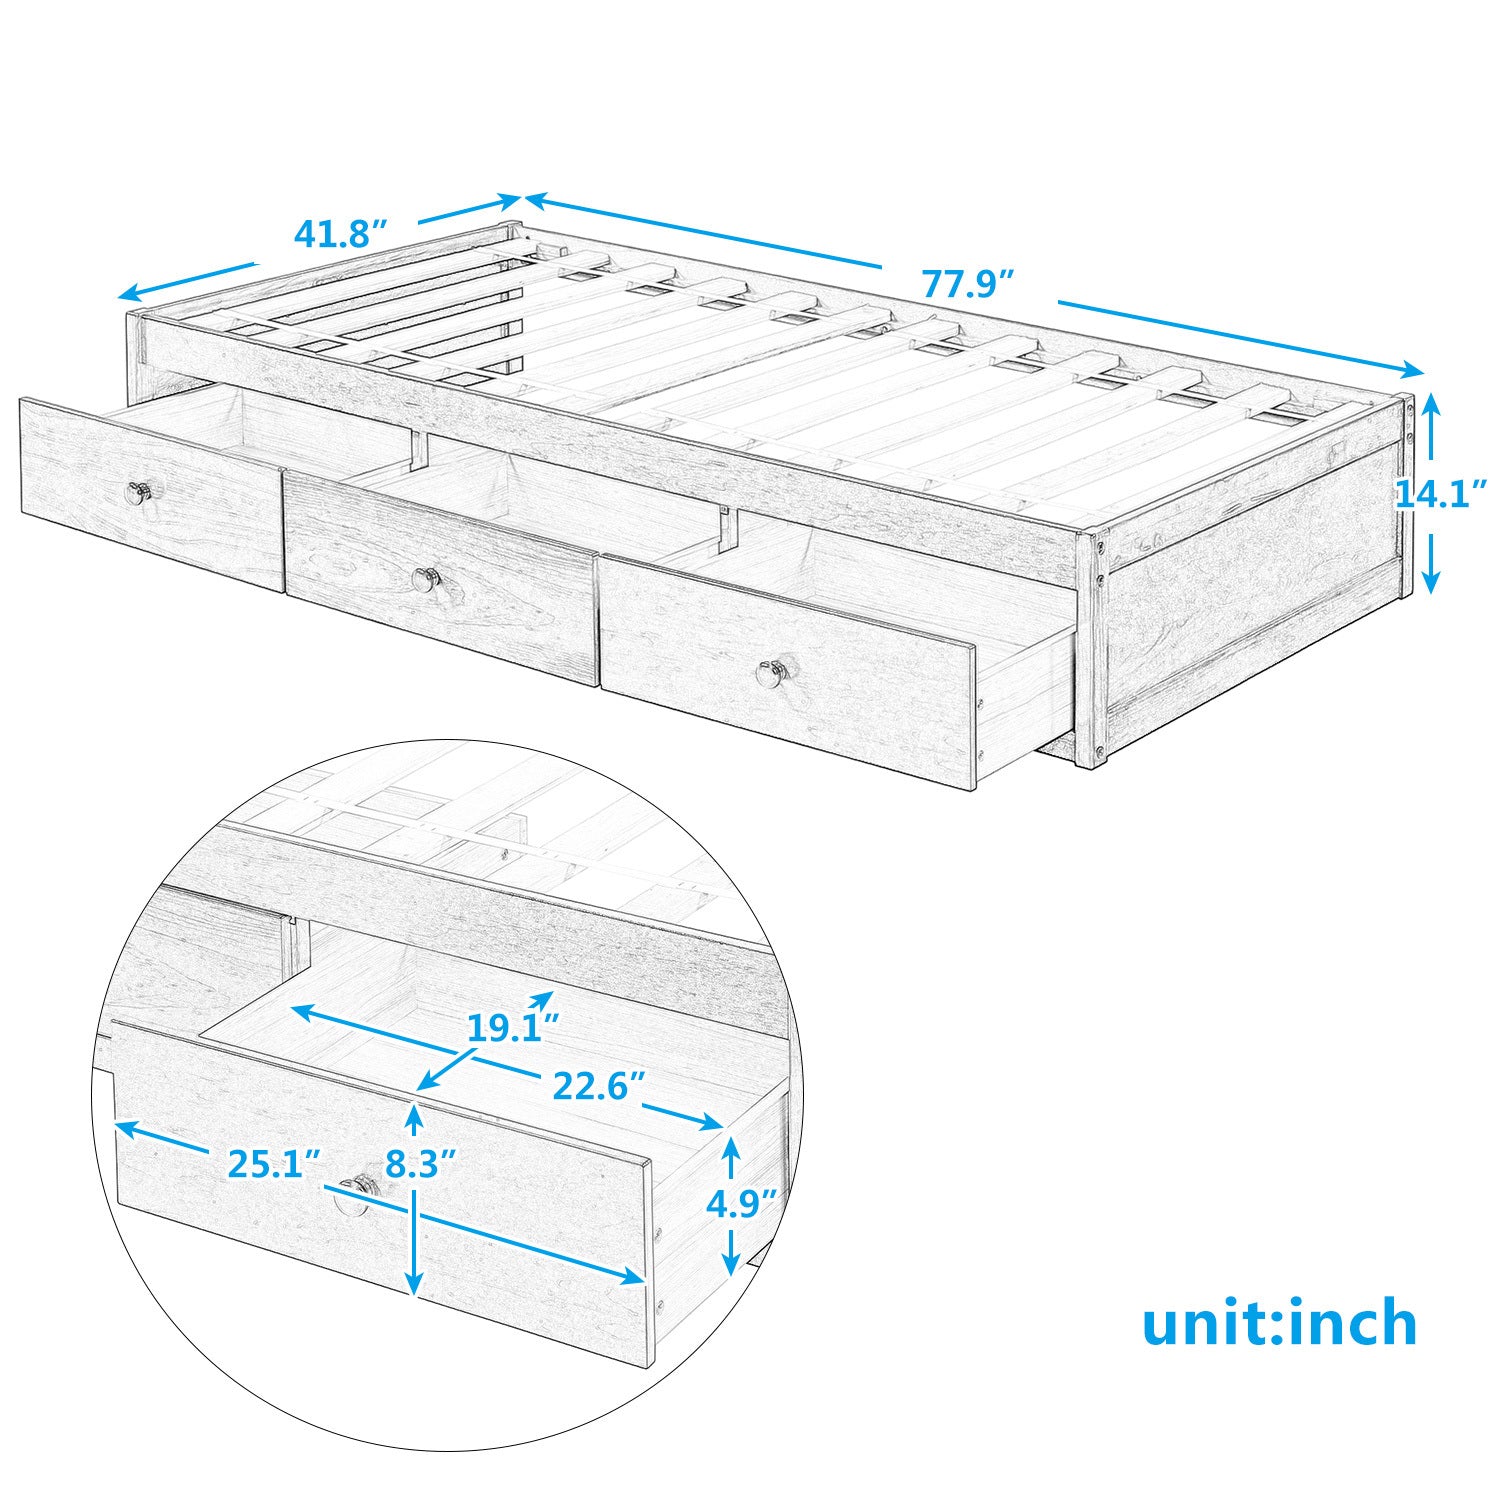 Orisfur. Twin Platform Bed Frame with Storage Drawers By: Alabama Beds